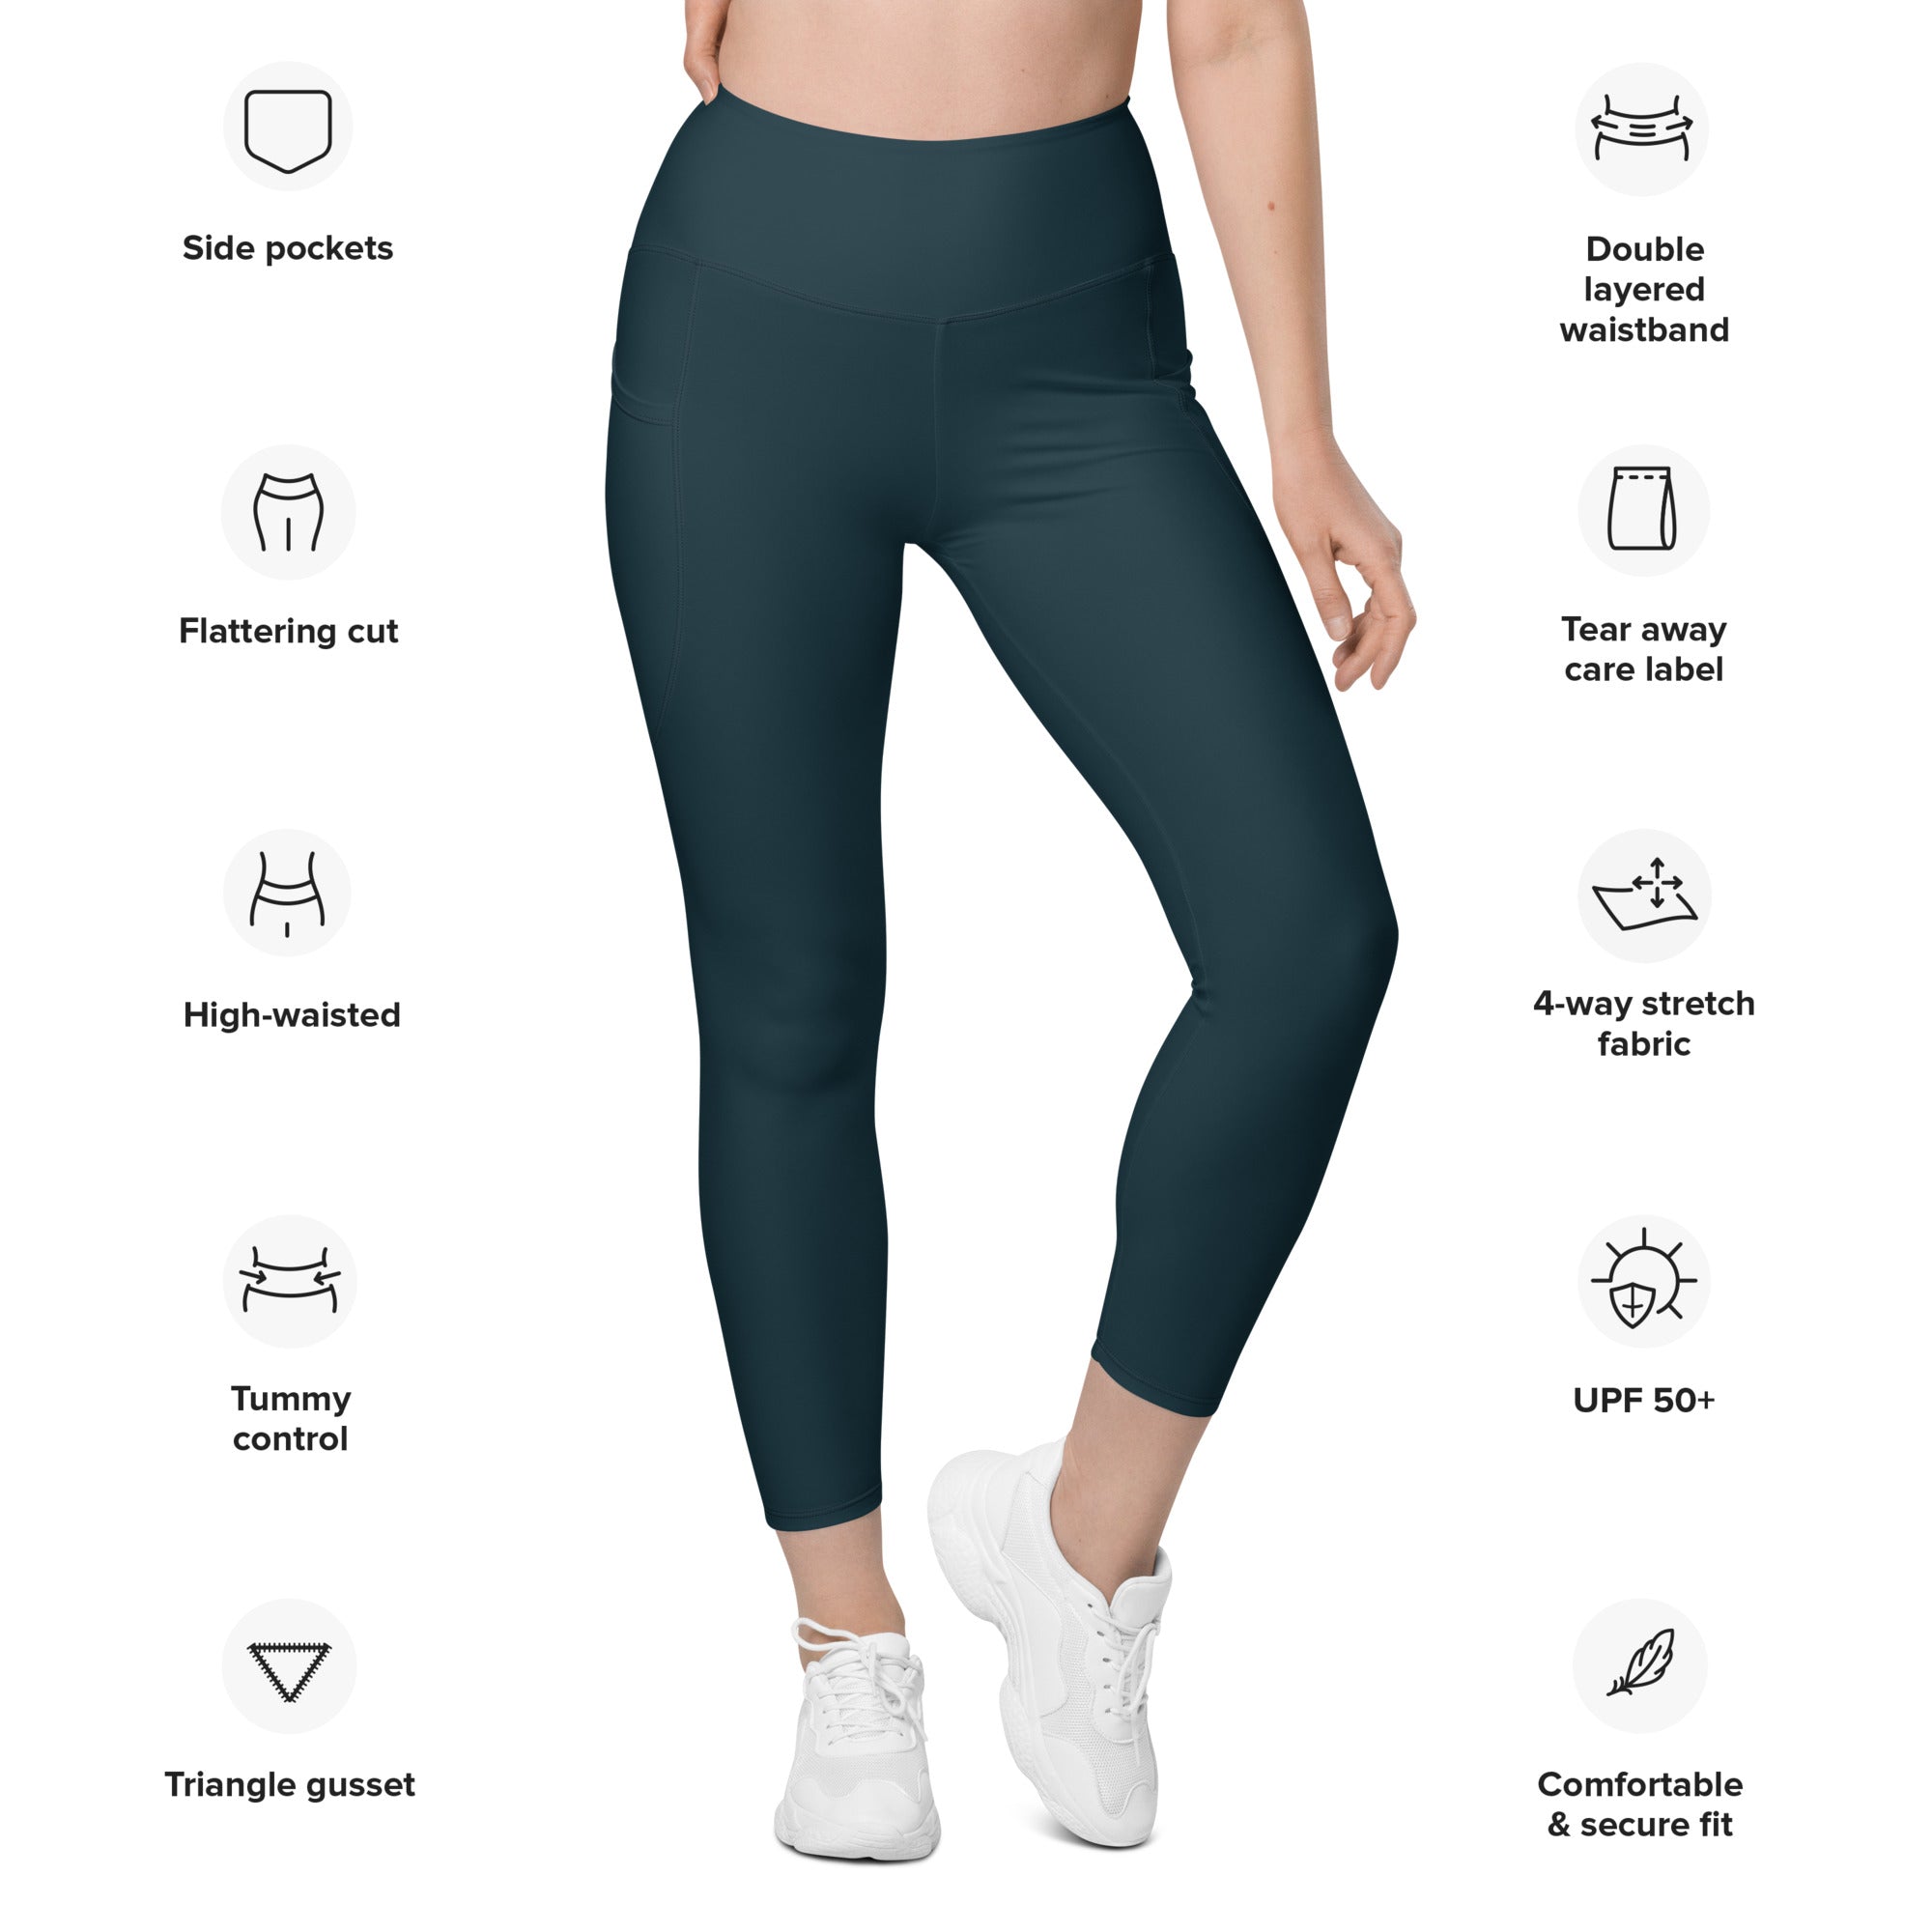 Girls Soft Cotton UPF 50+ Jersey Pocket Pants | Turquoise